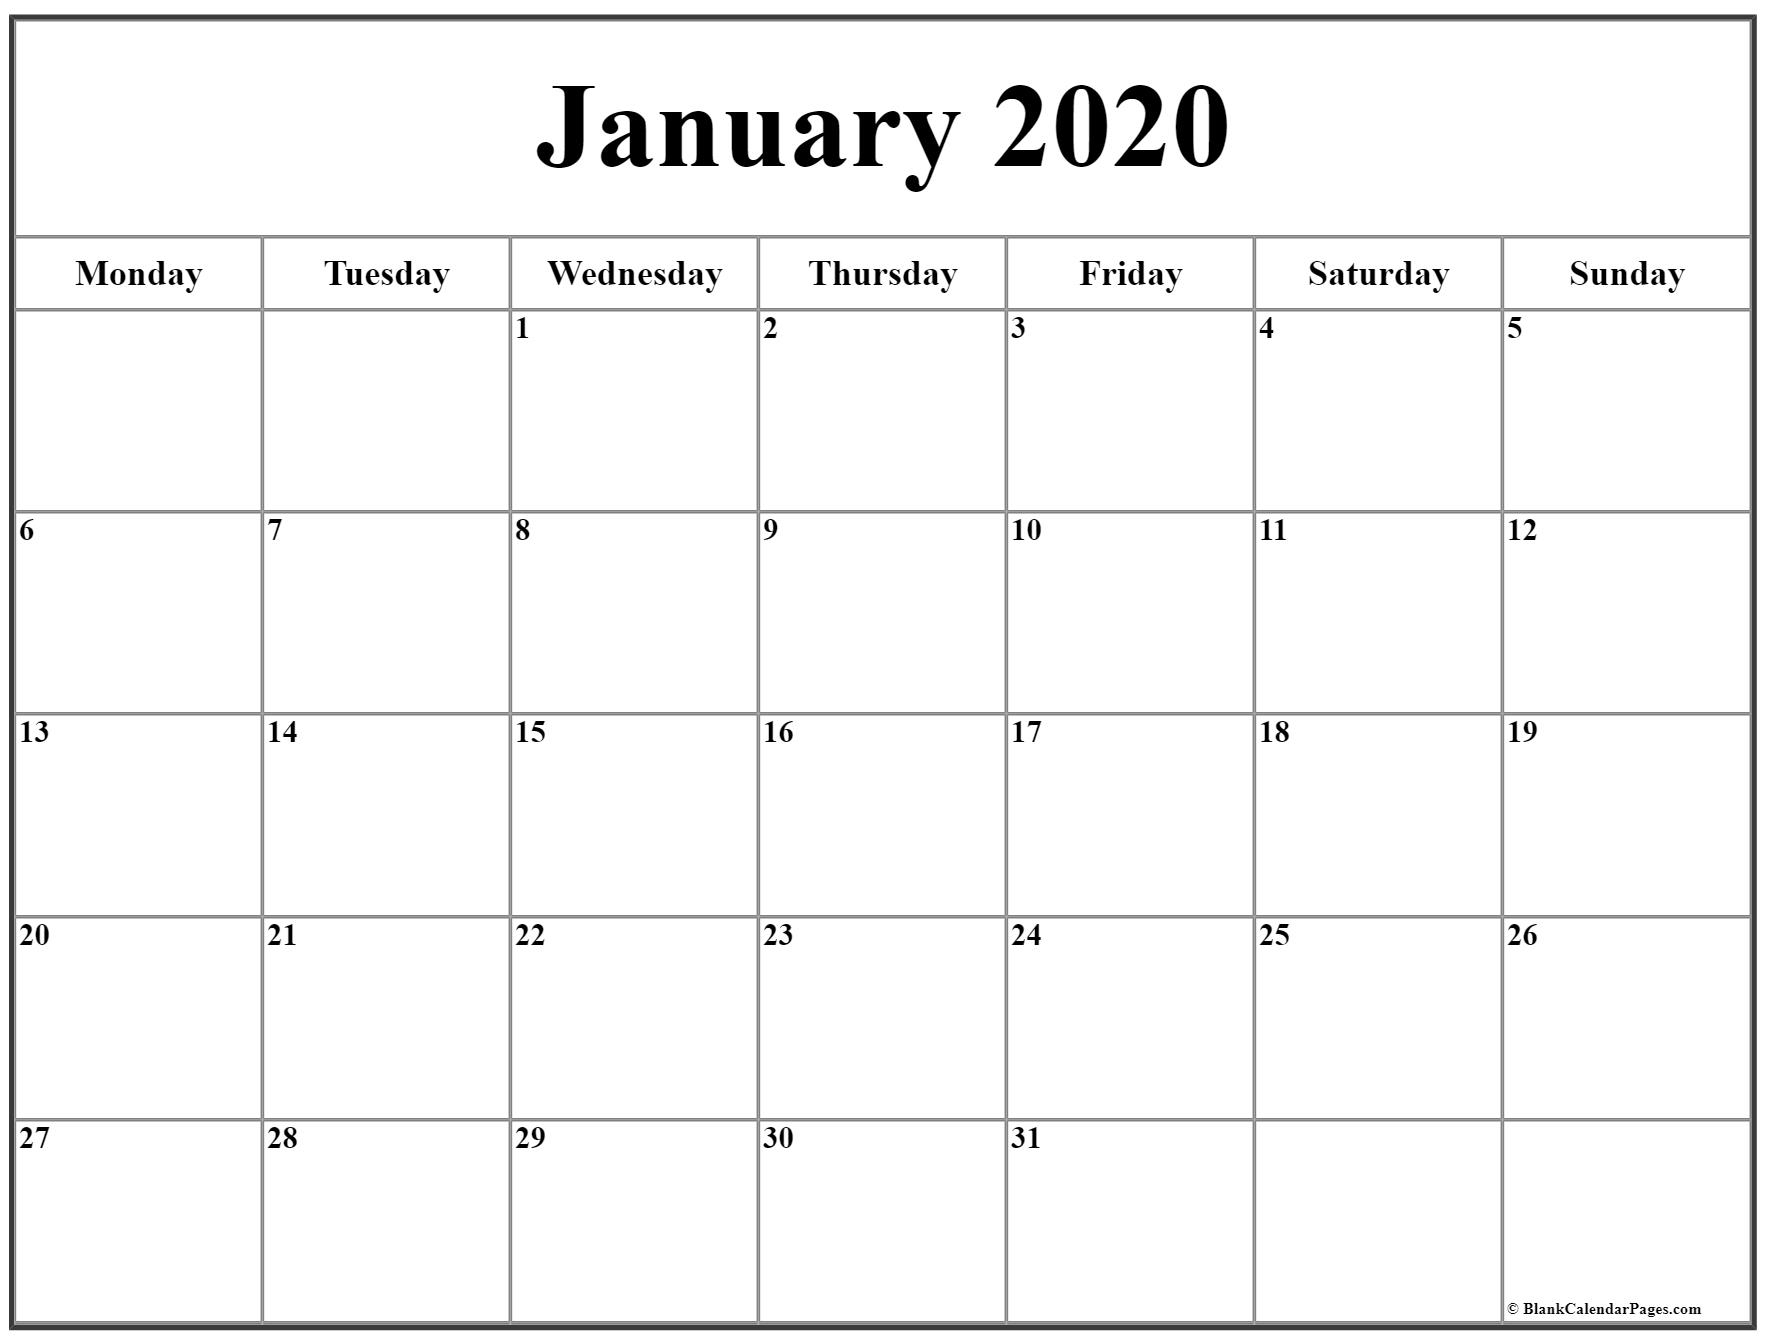 Monday Through Sunday Calendar | Calendar For Planning regarding Pvz Gw2 Event Calendar